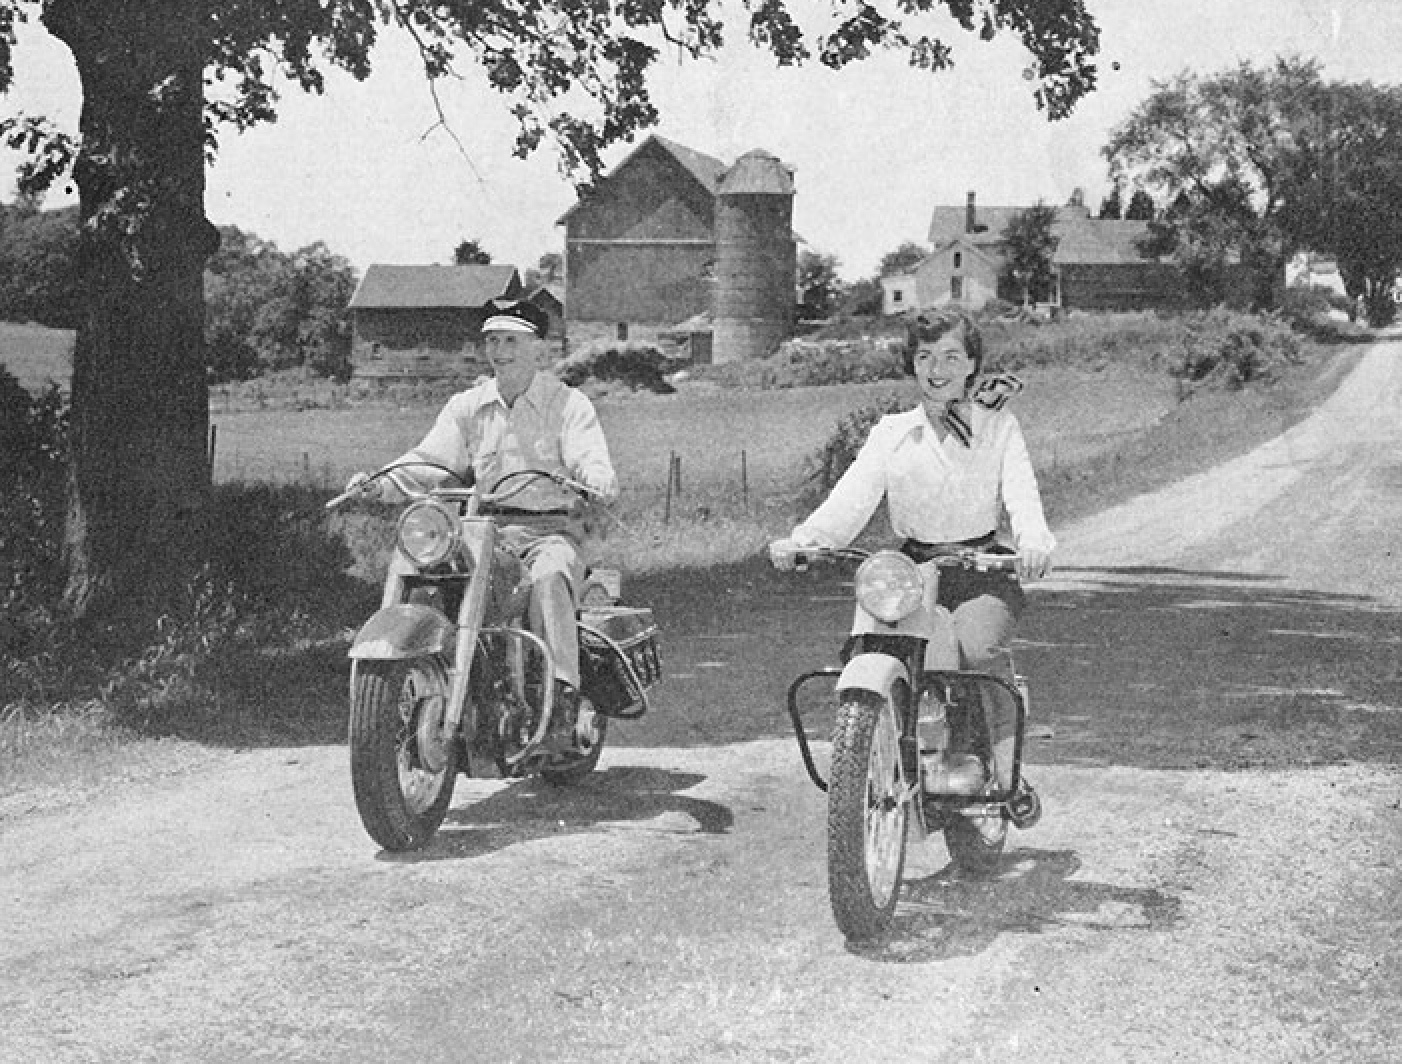 1951 - Harley-Davidson foto de epoca